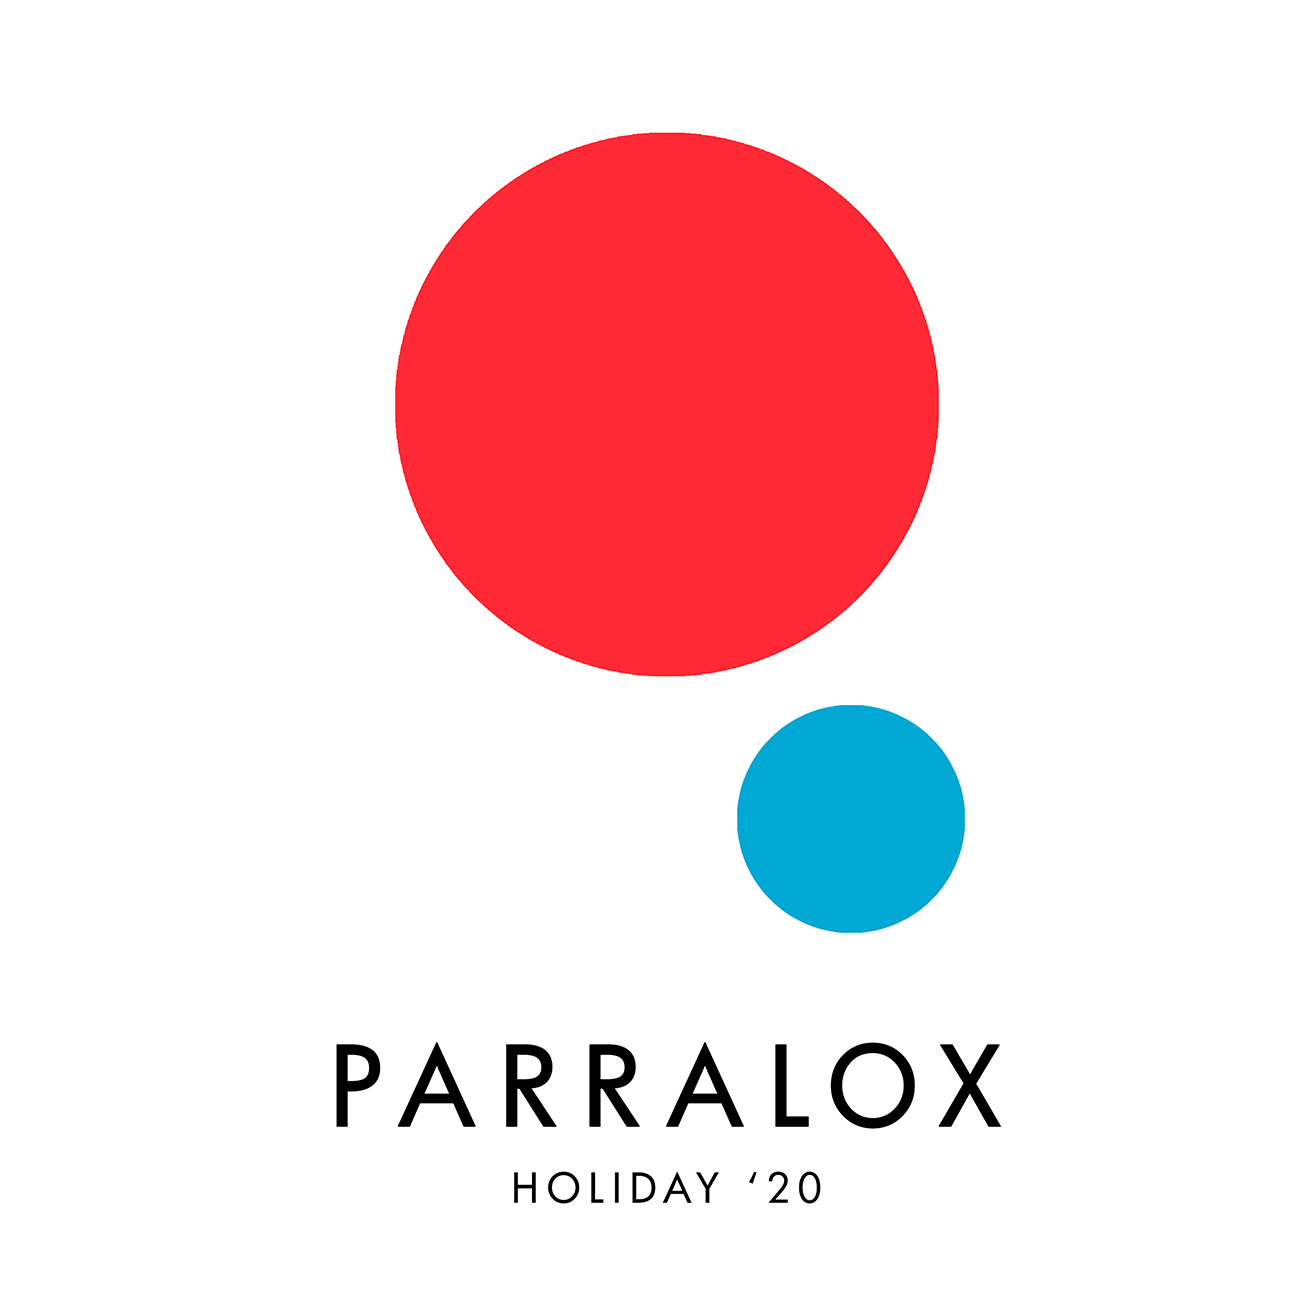 Parralox Holiday 20